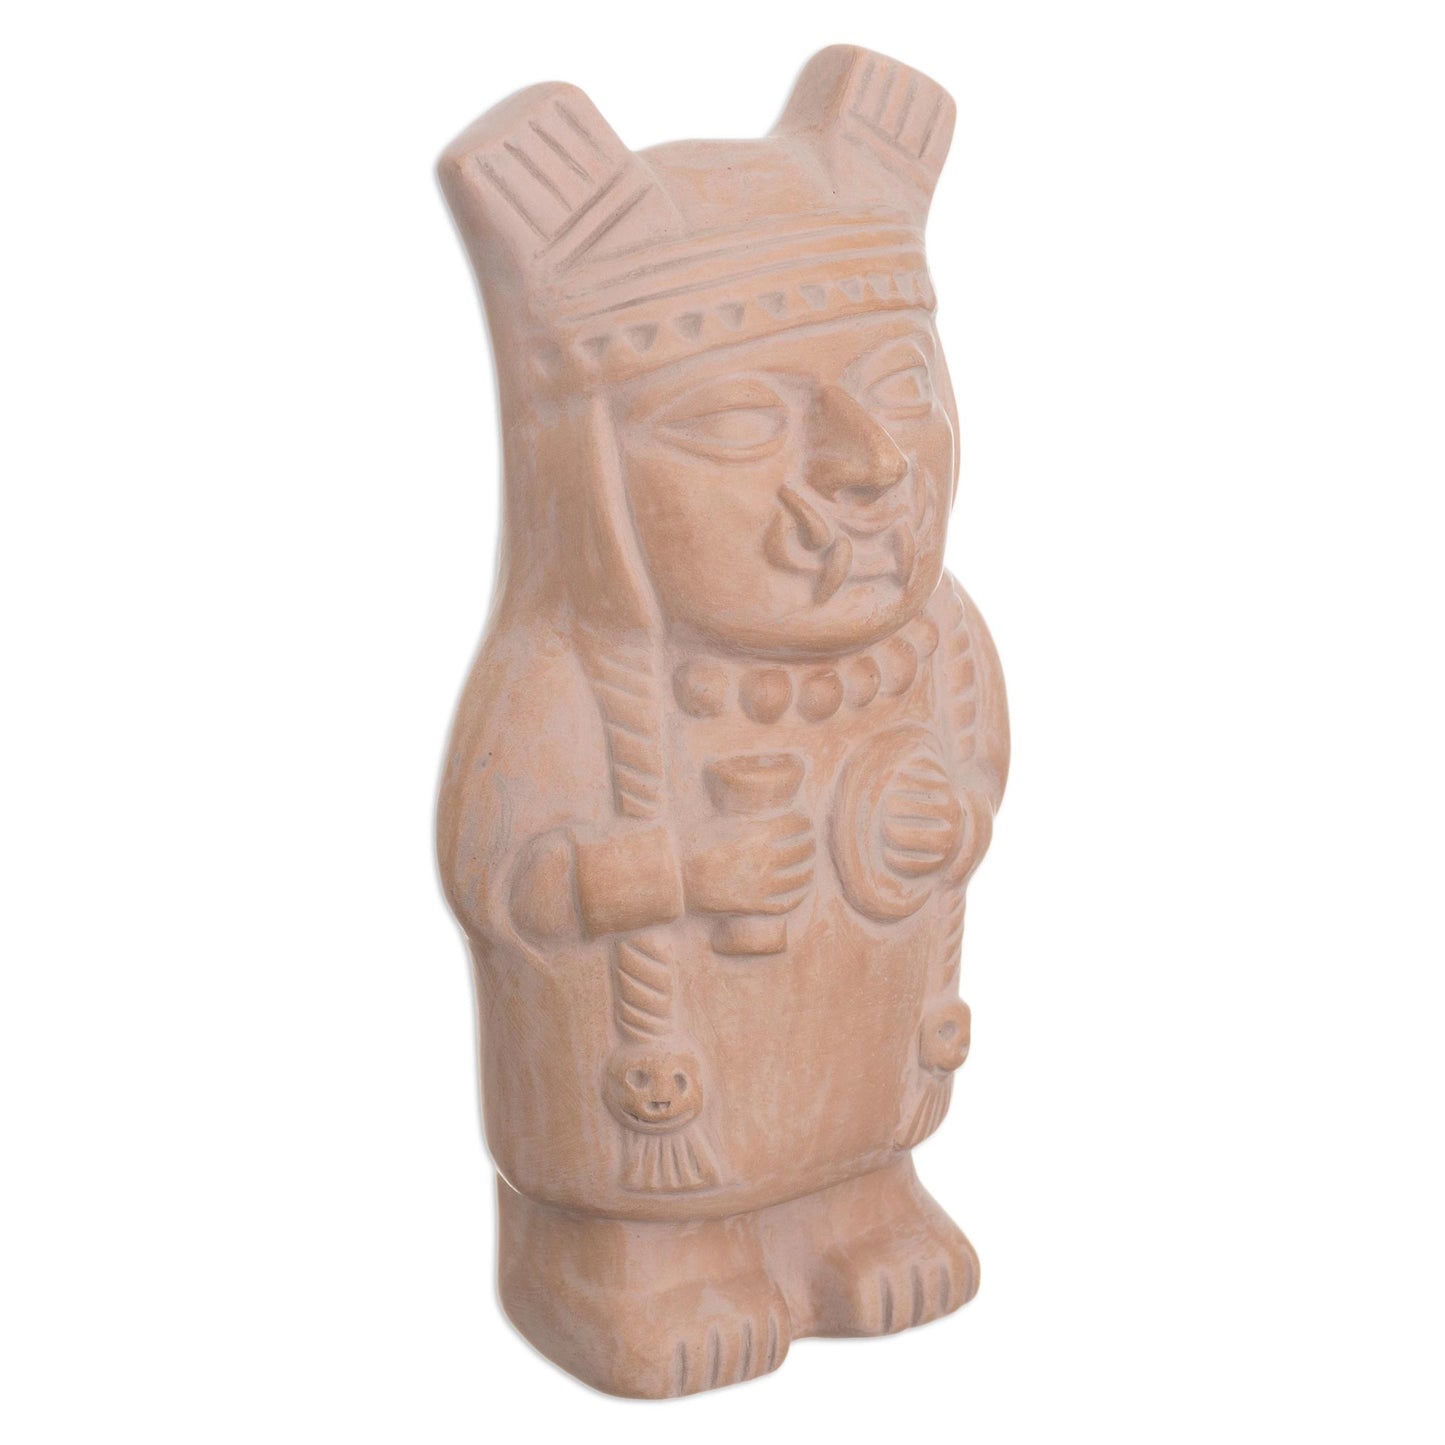 Cuchimilco Protector - archaeological ceramic sculpture